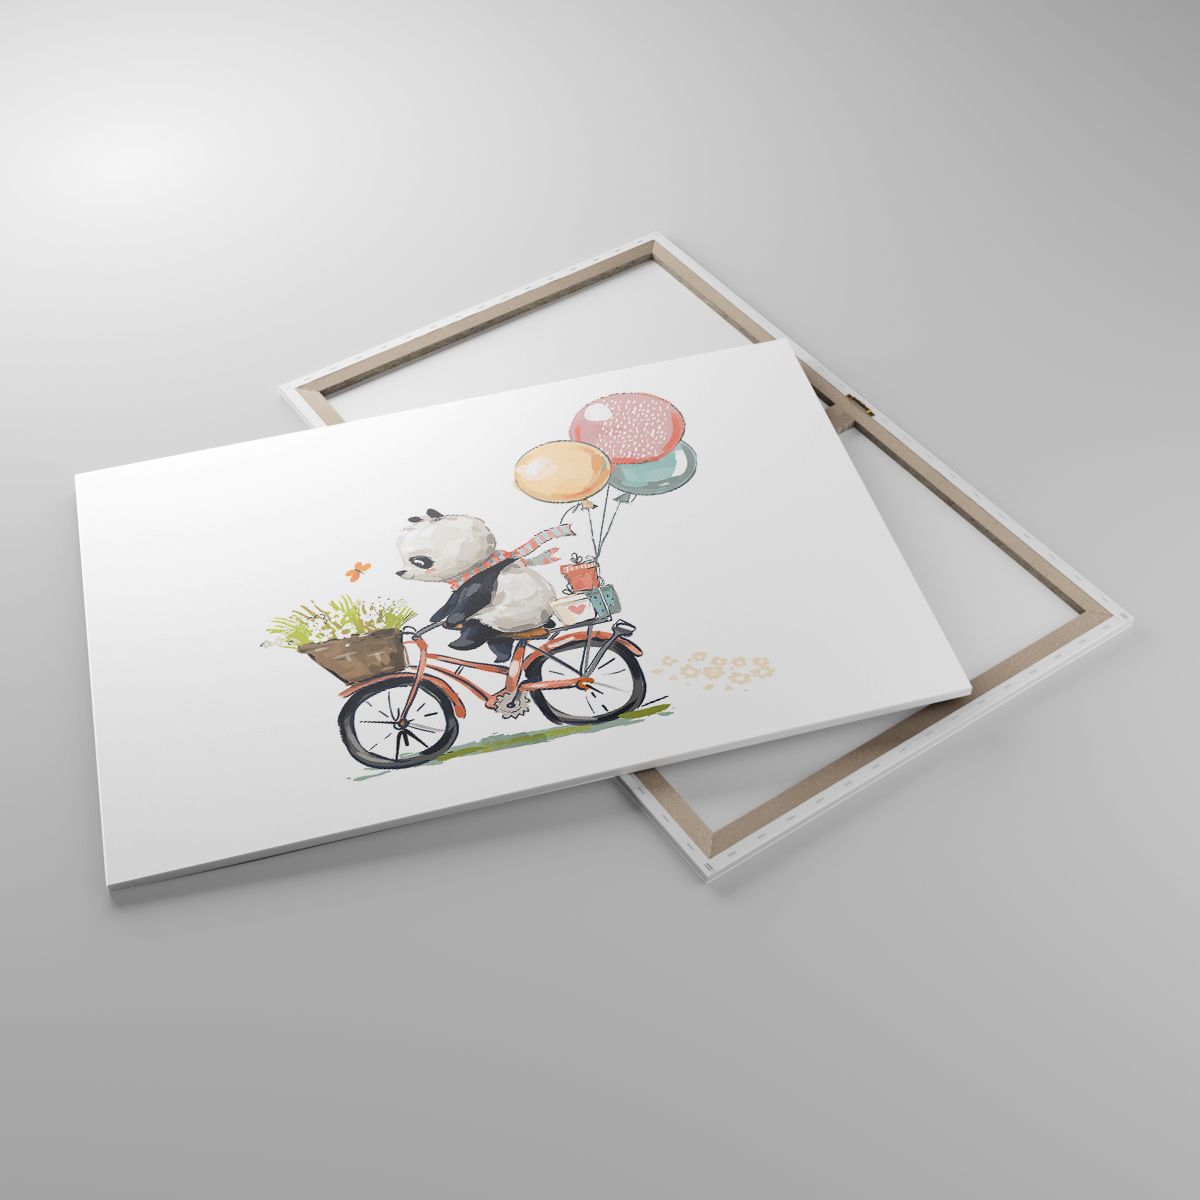 Leinwandbild Für Kinder, Leinwandbild Panda Auf Einem Fahrrad, Leinwandbild Abstraktion, Leinwandbild Bunte Luftballons, Leinwandbild Geschichte